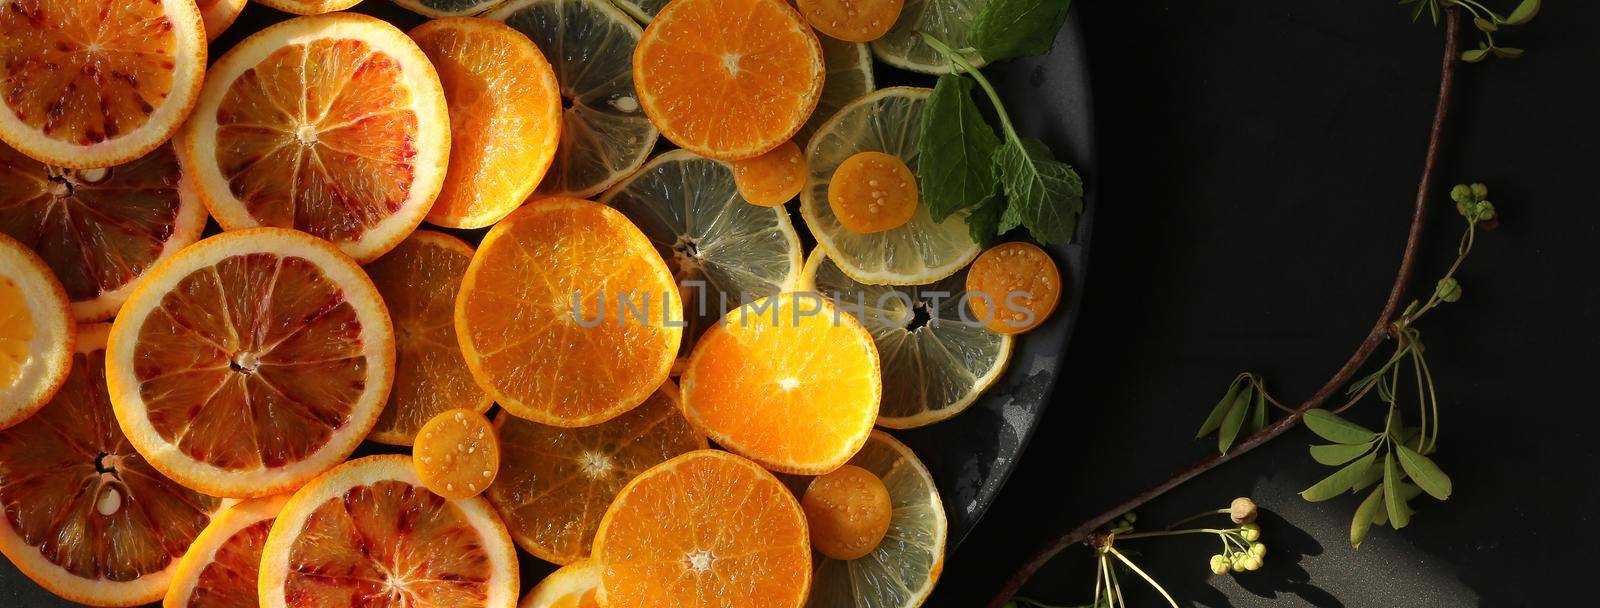 Summer autumn background with citrus by NelliPolk